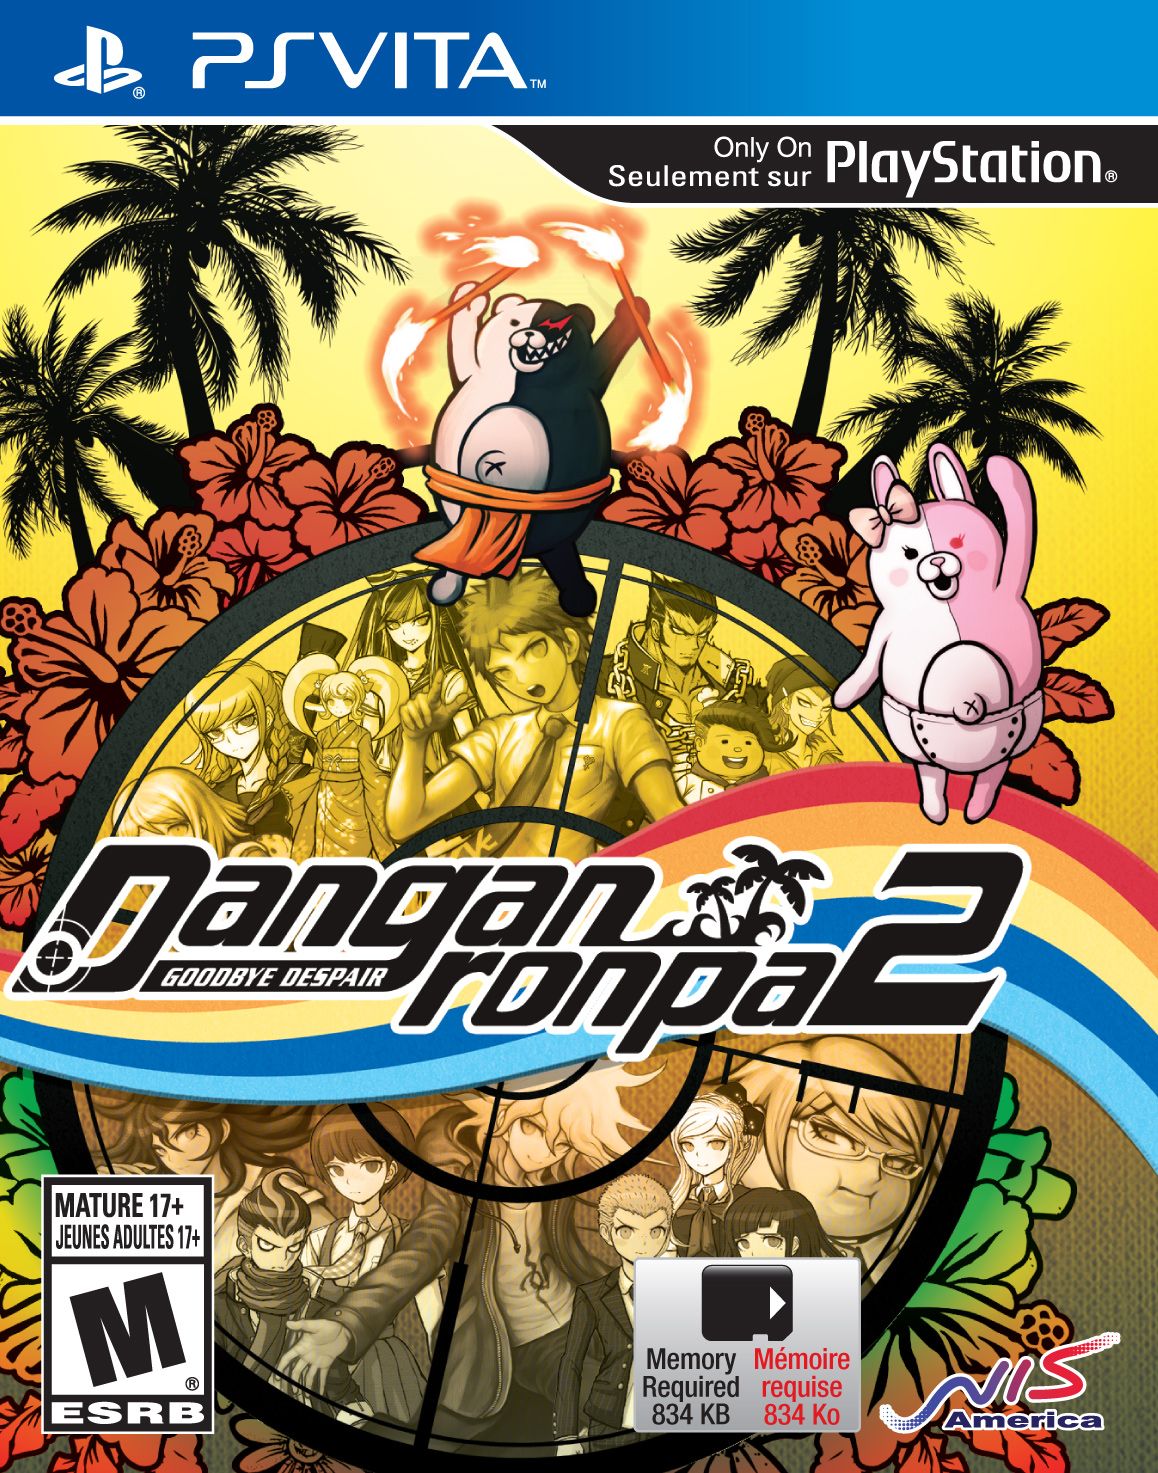 Danganronpa 2: Goodbye Despair screenshots, image and picture